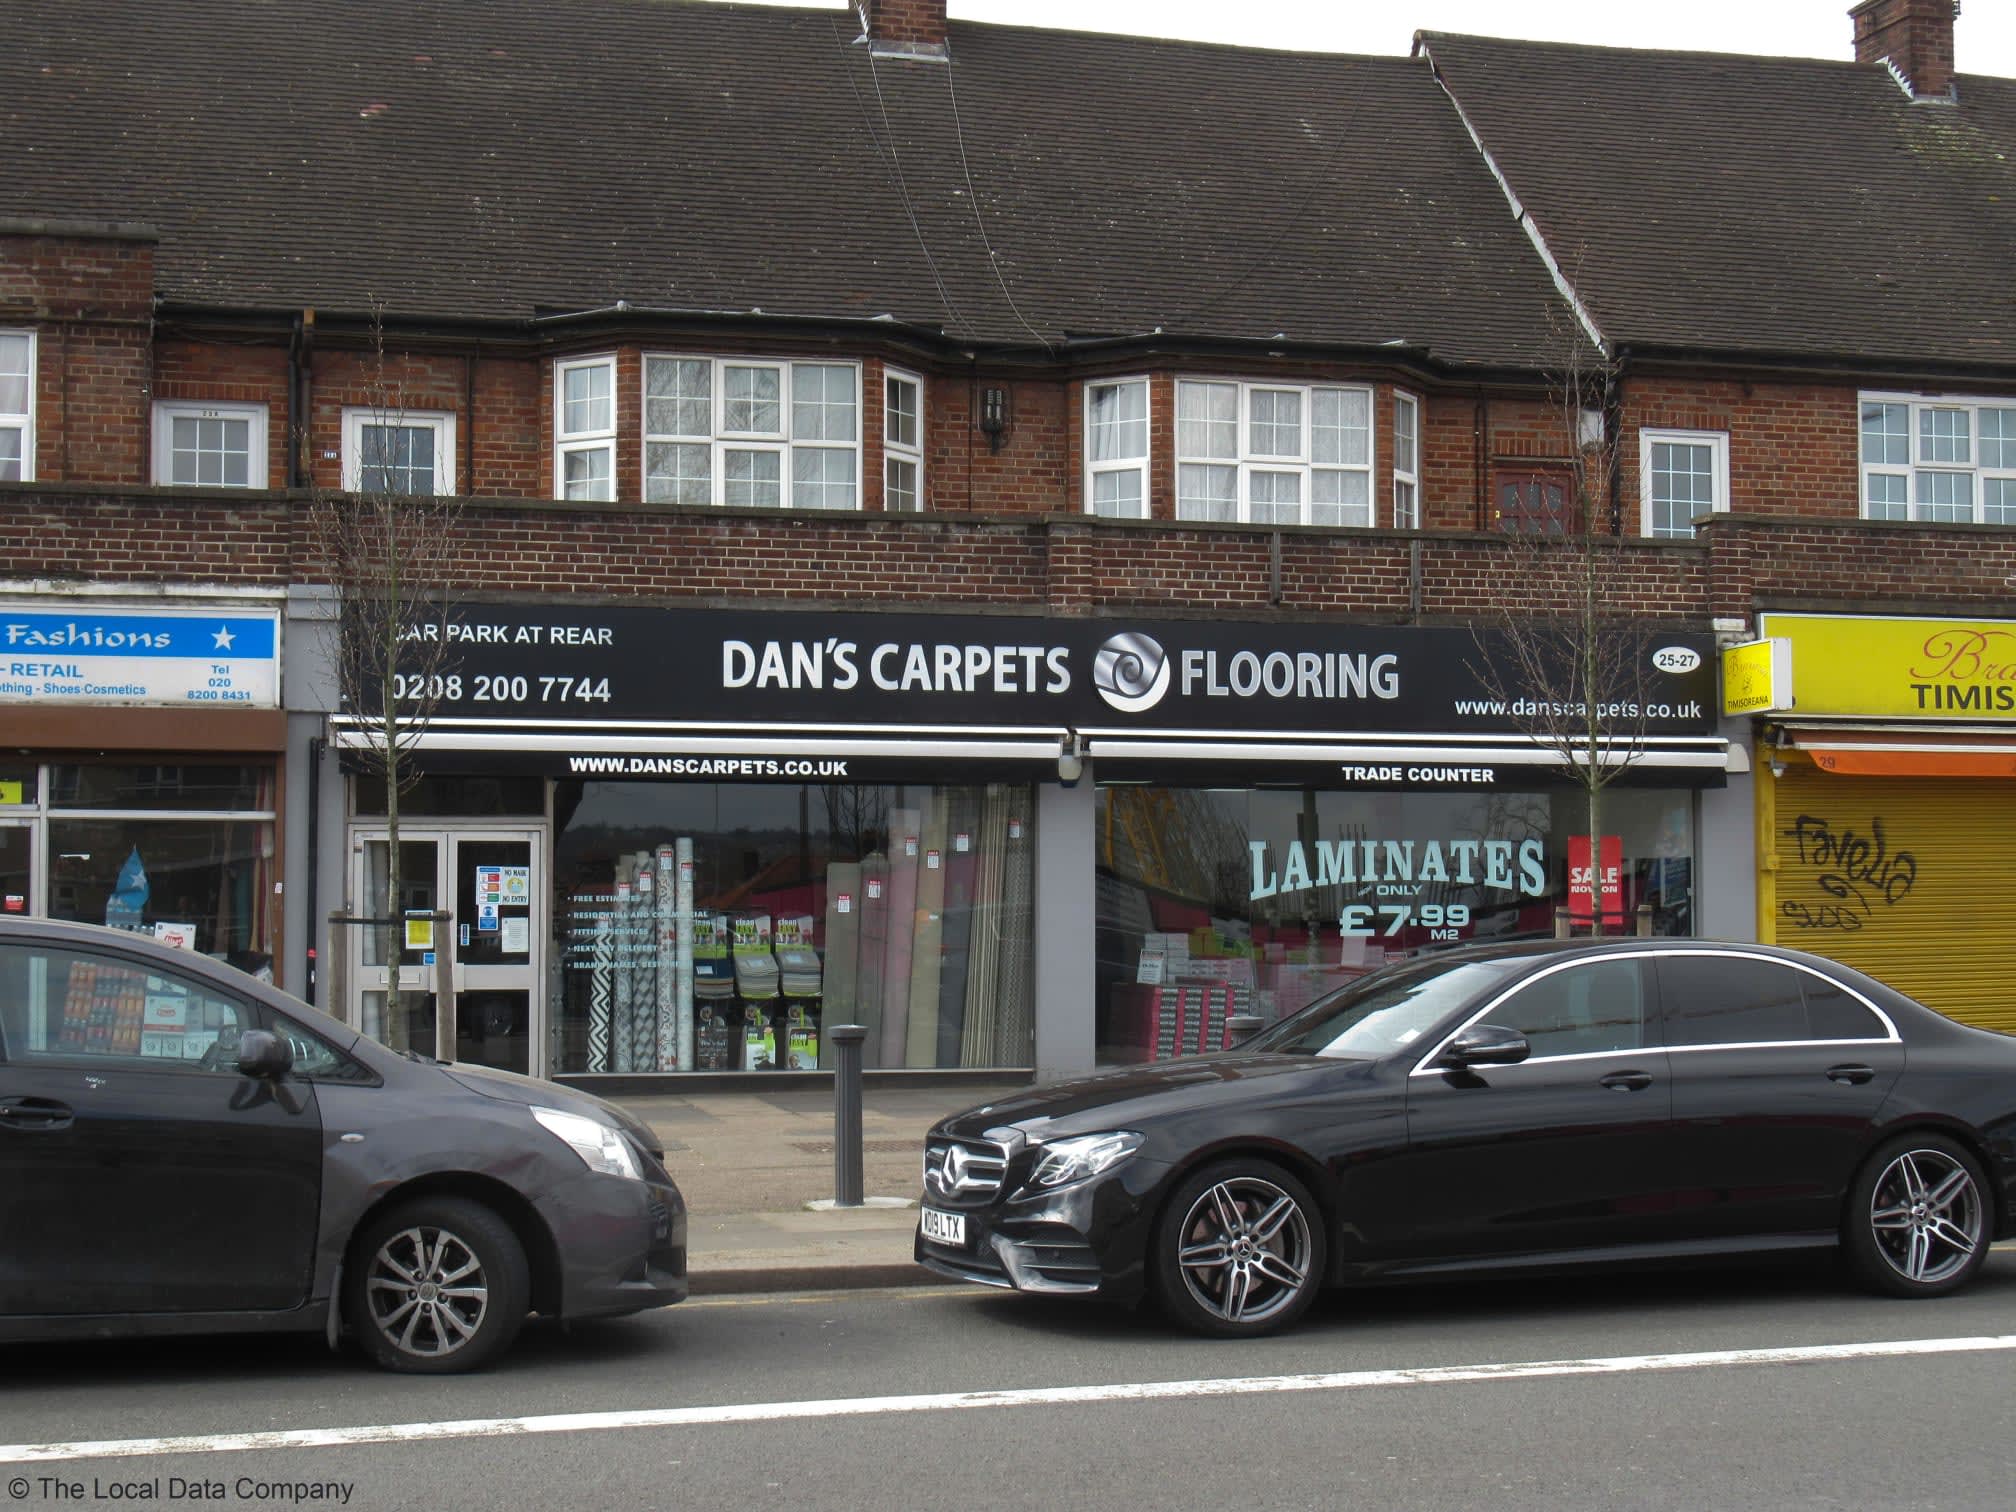 Dan's Carpets & Flooring Edgware 020 8200 7744